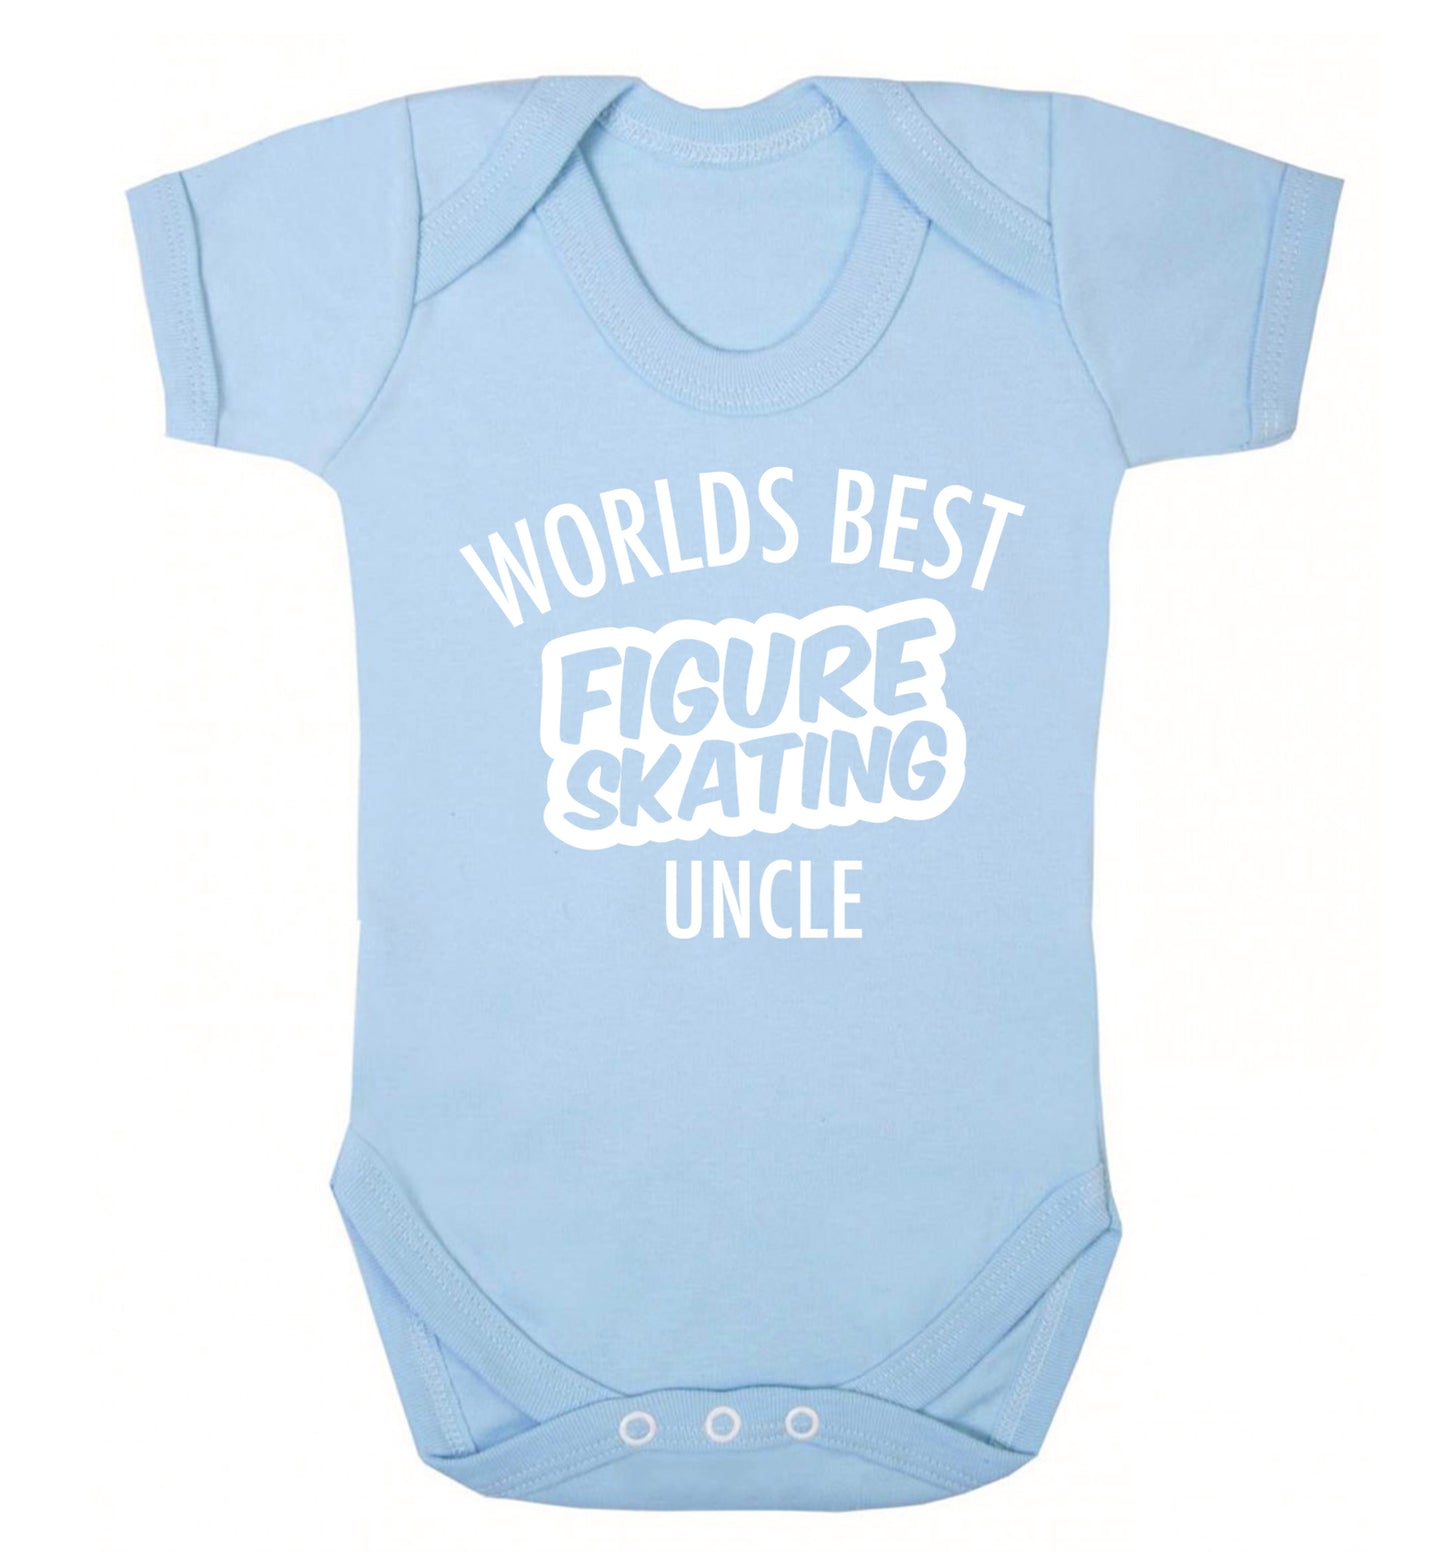 Worlds best figure skating uncle Baby Vest pale blue 18-24 months